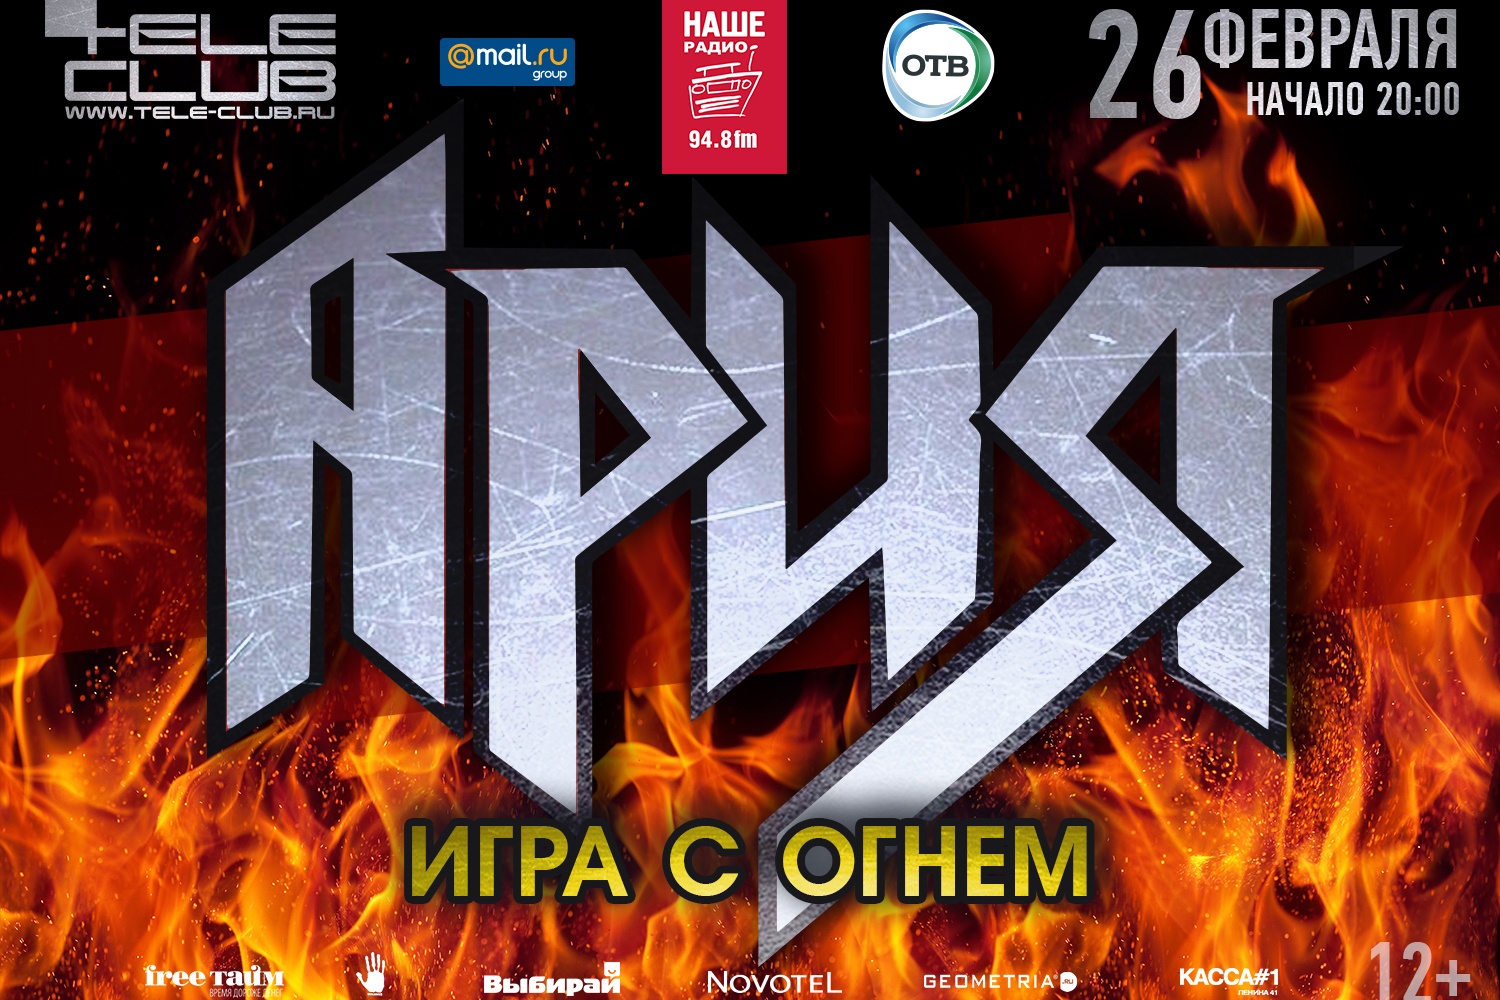 Билеты на концерт арии. Ария концерт Екатеринбург. Ария плакат на концерт\. Teleclub Ария. Ария афиша.